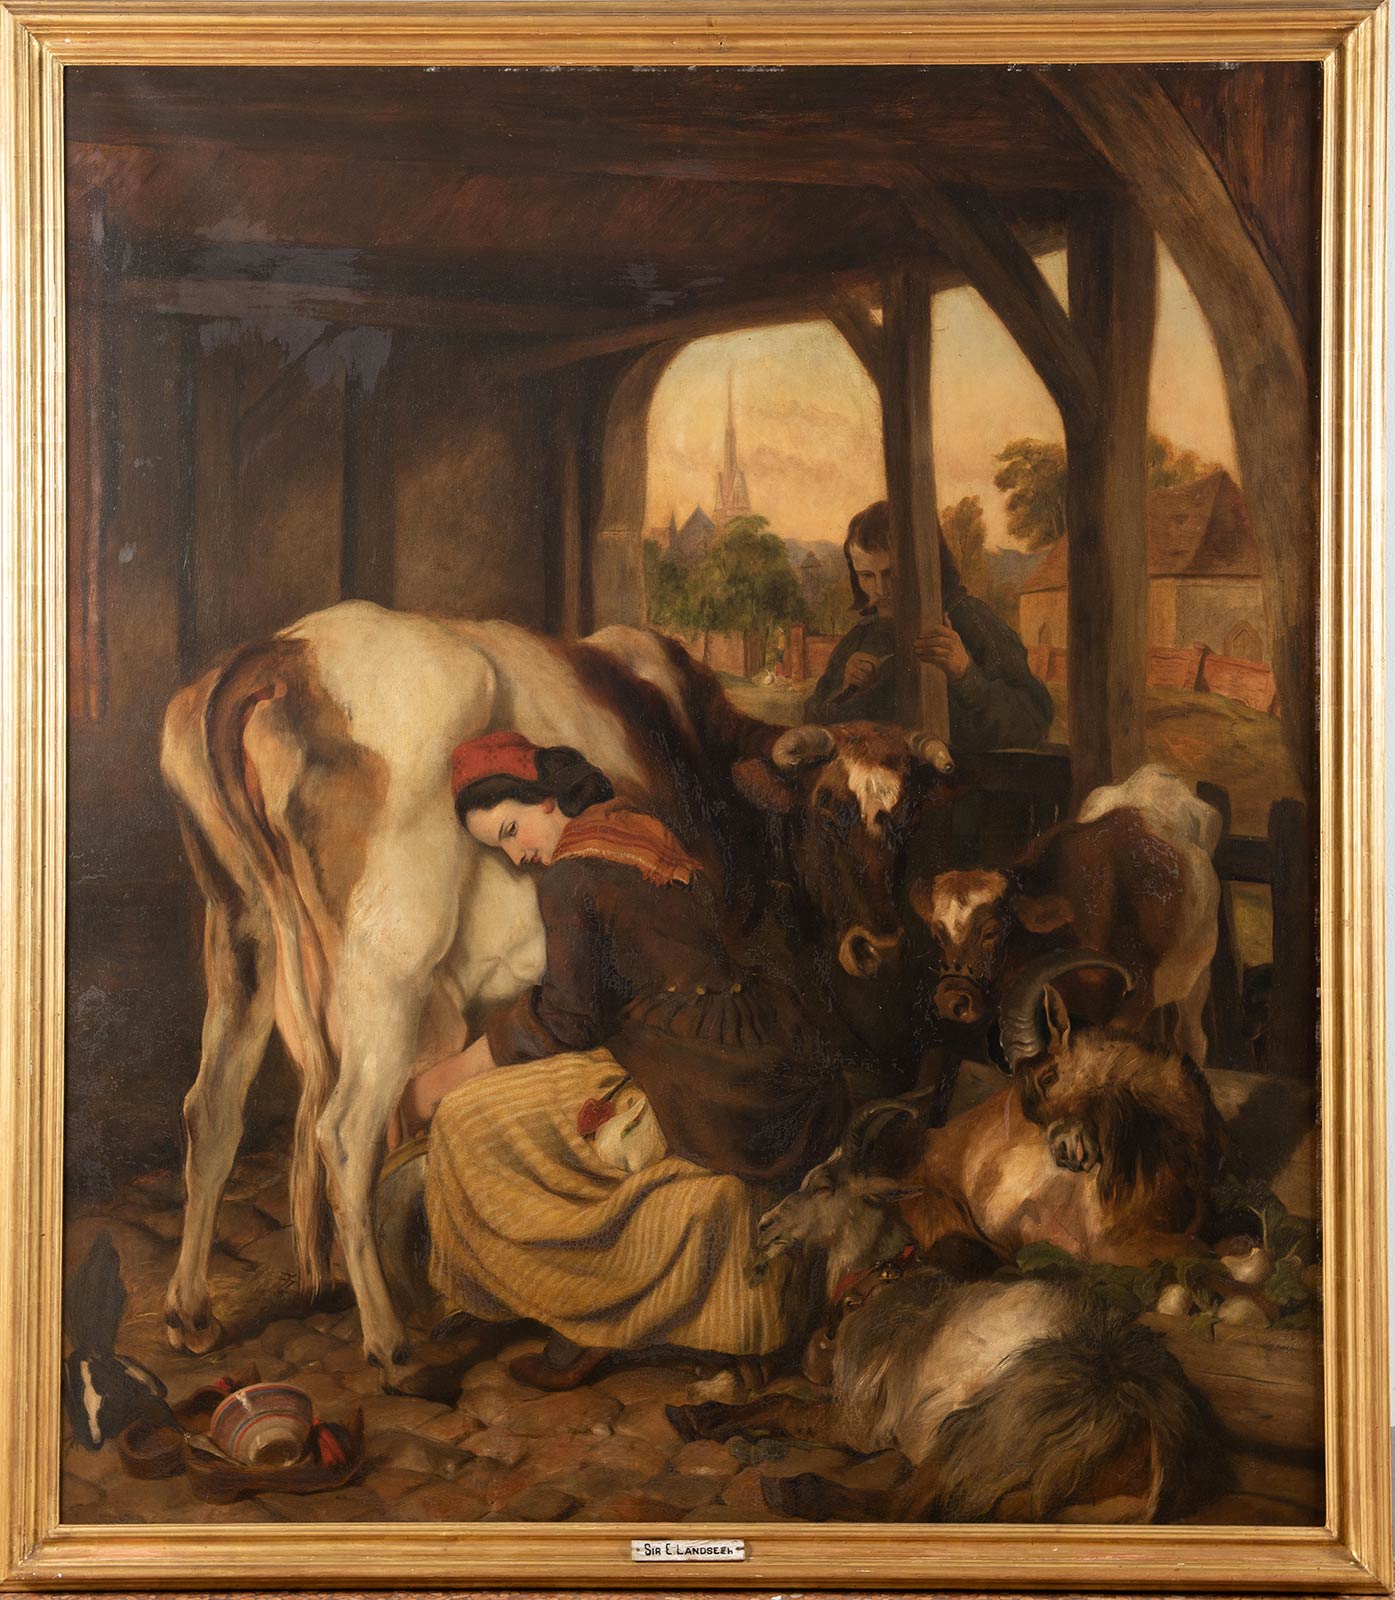 Edwin Landseer (1802 - 1873), attribuito a, “La mungitrice”.